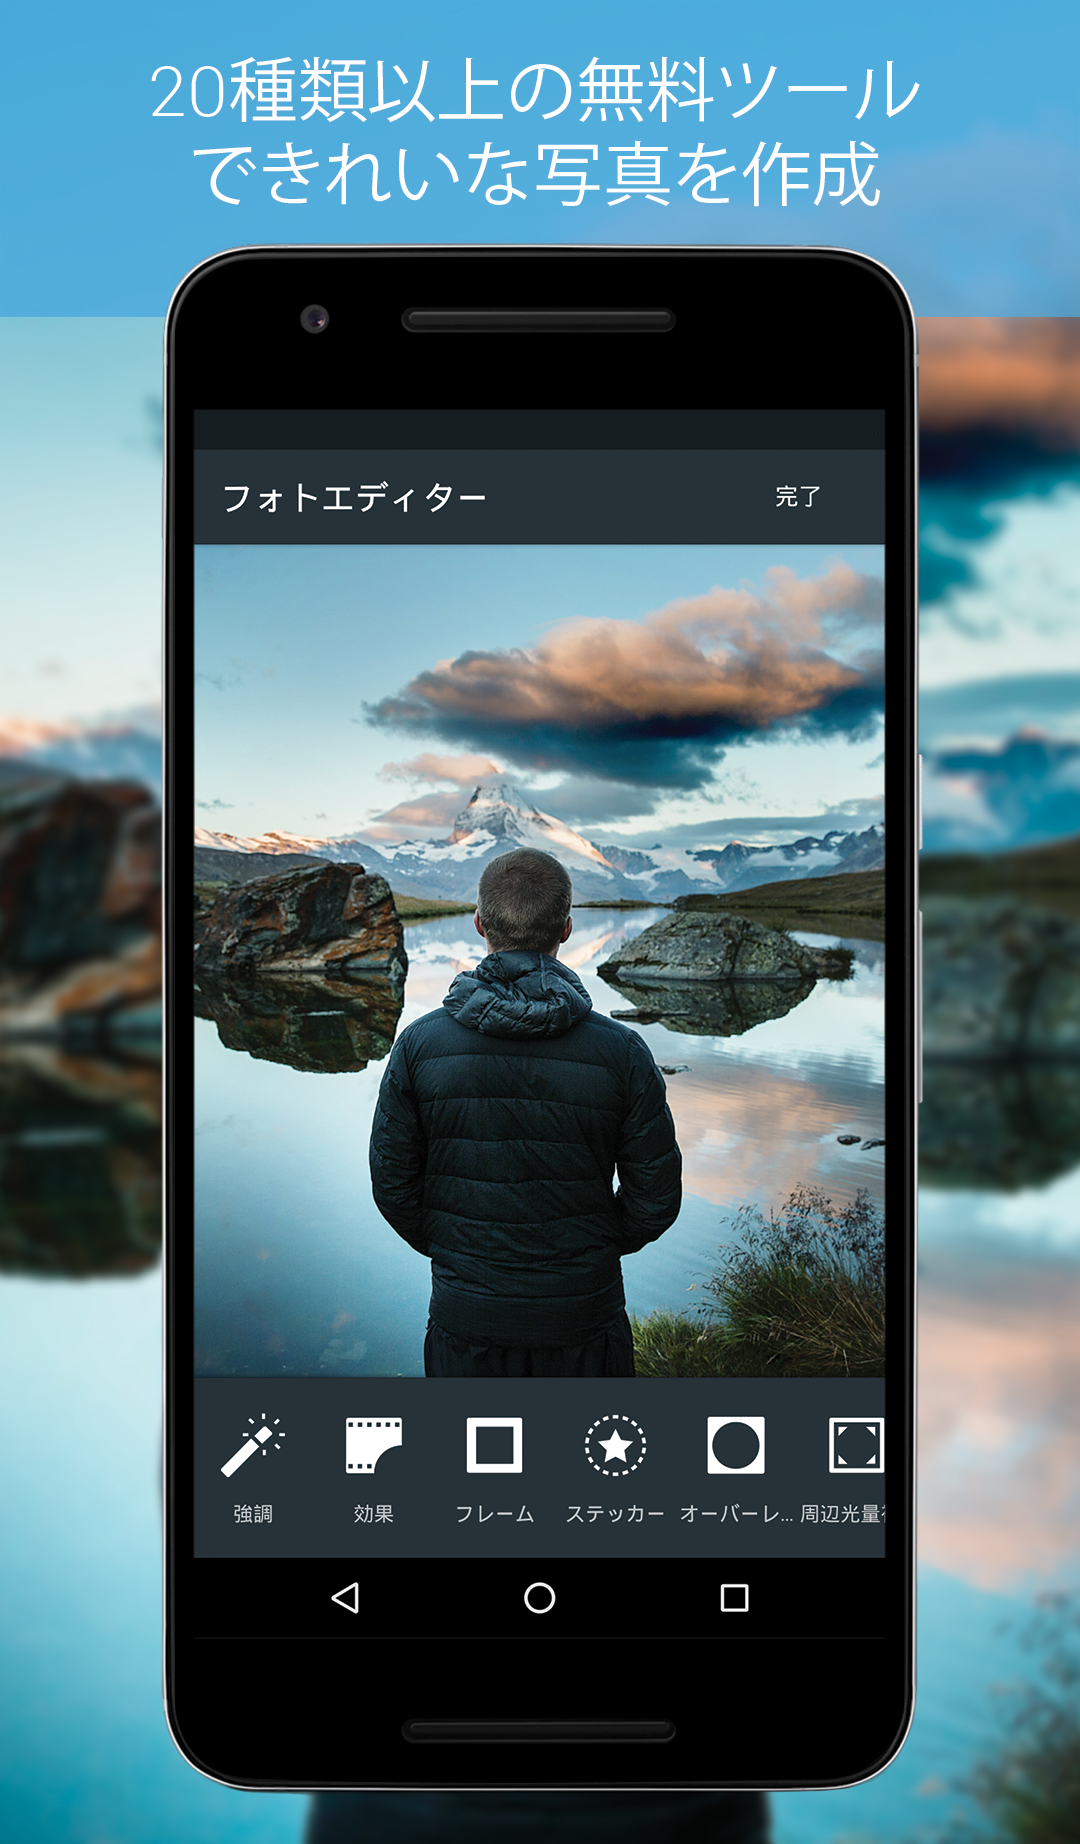 Android application Photo Editor by Aviary screenshort